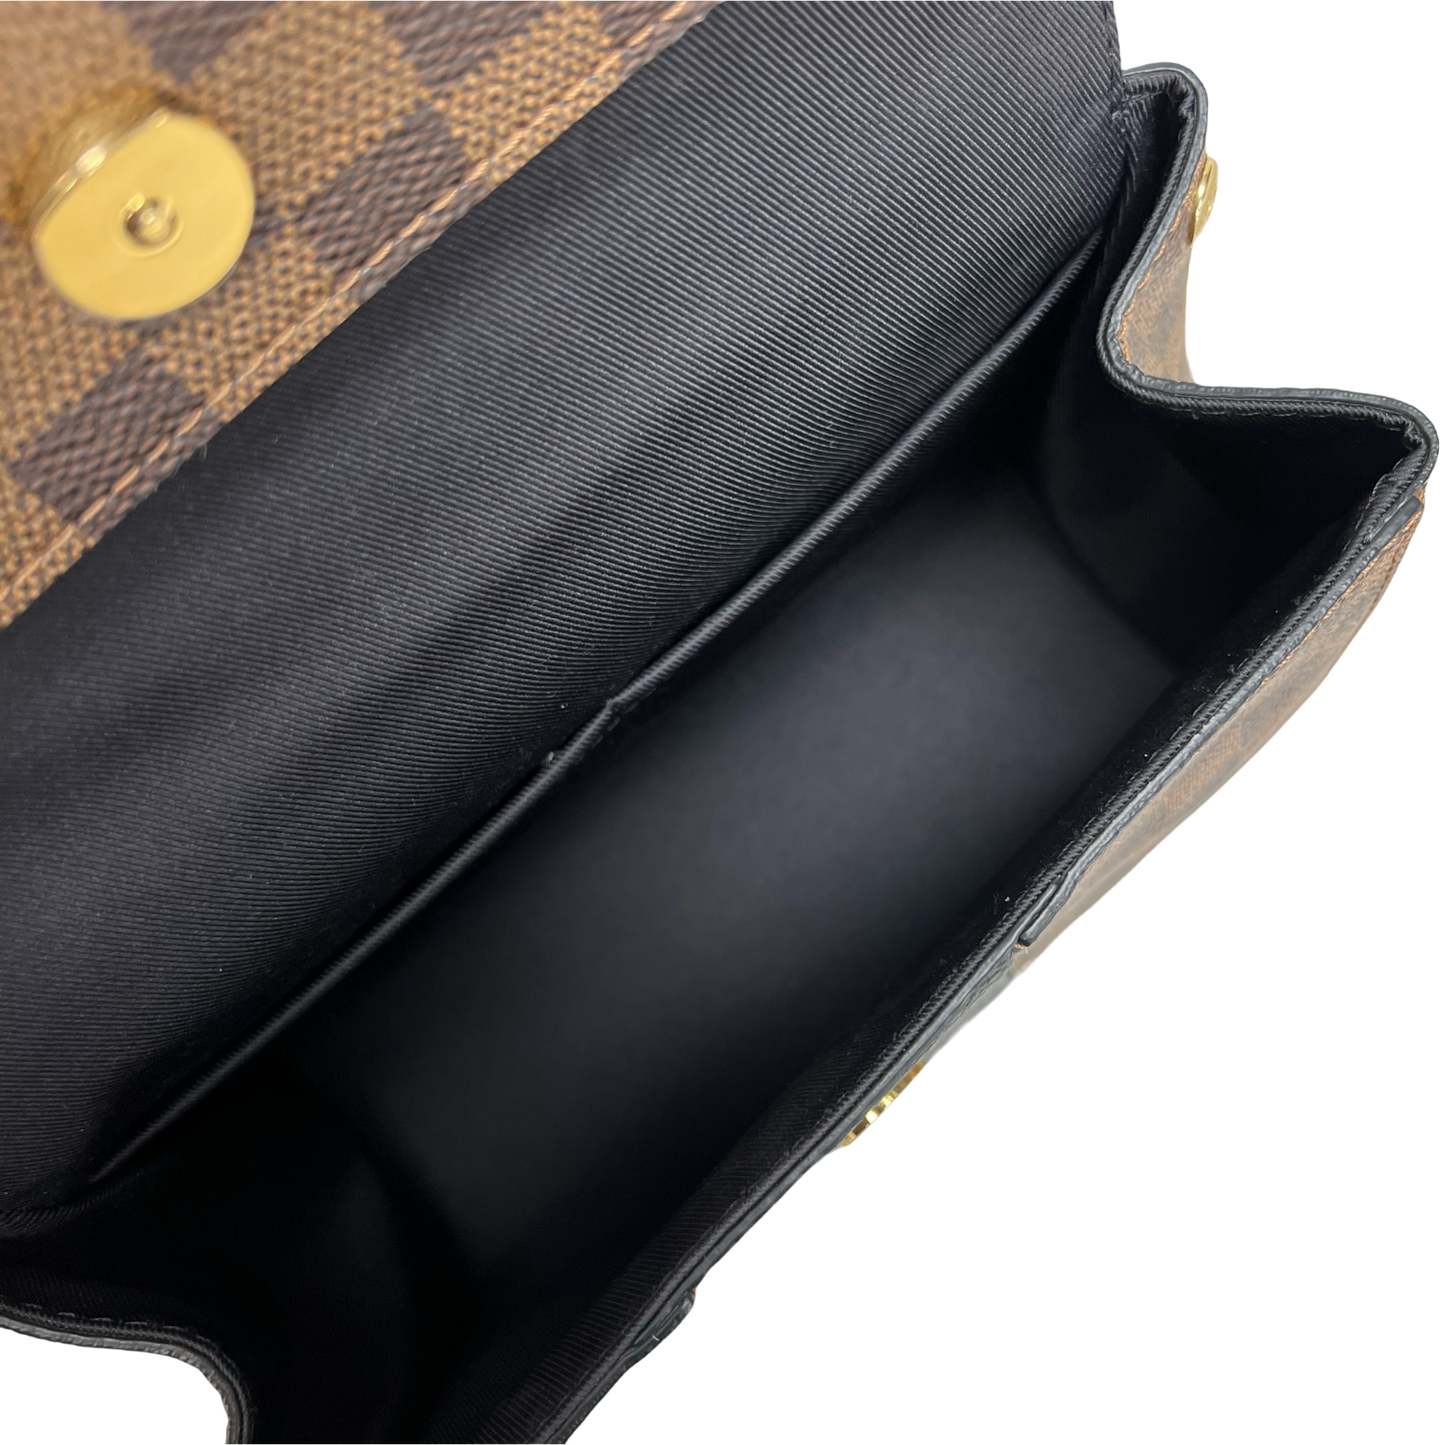 Louis Vuitton Bond Street Handbag Damier with Leather BB